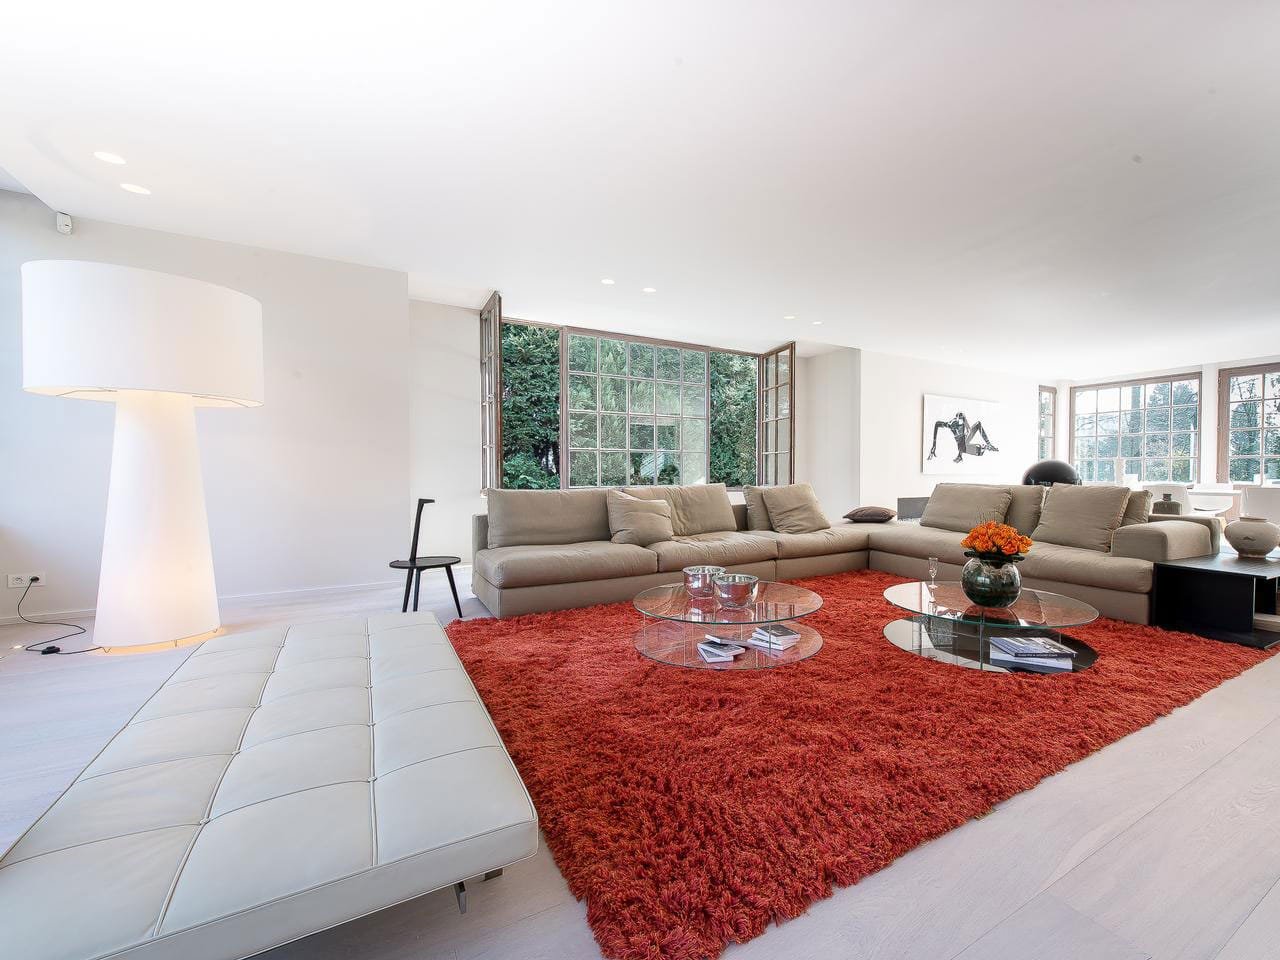 The Exquisite Villa Modern Living Room